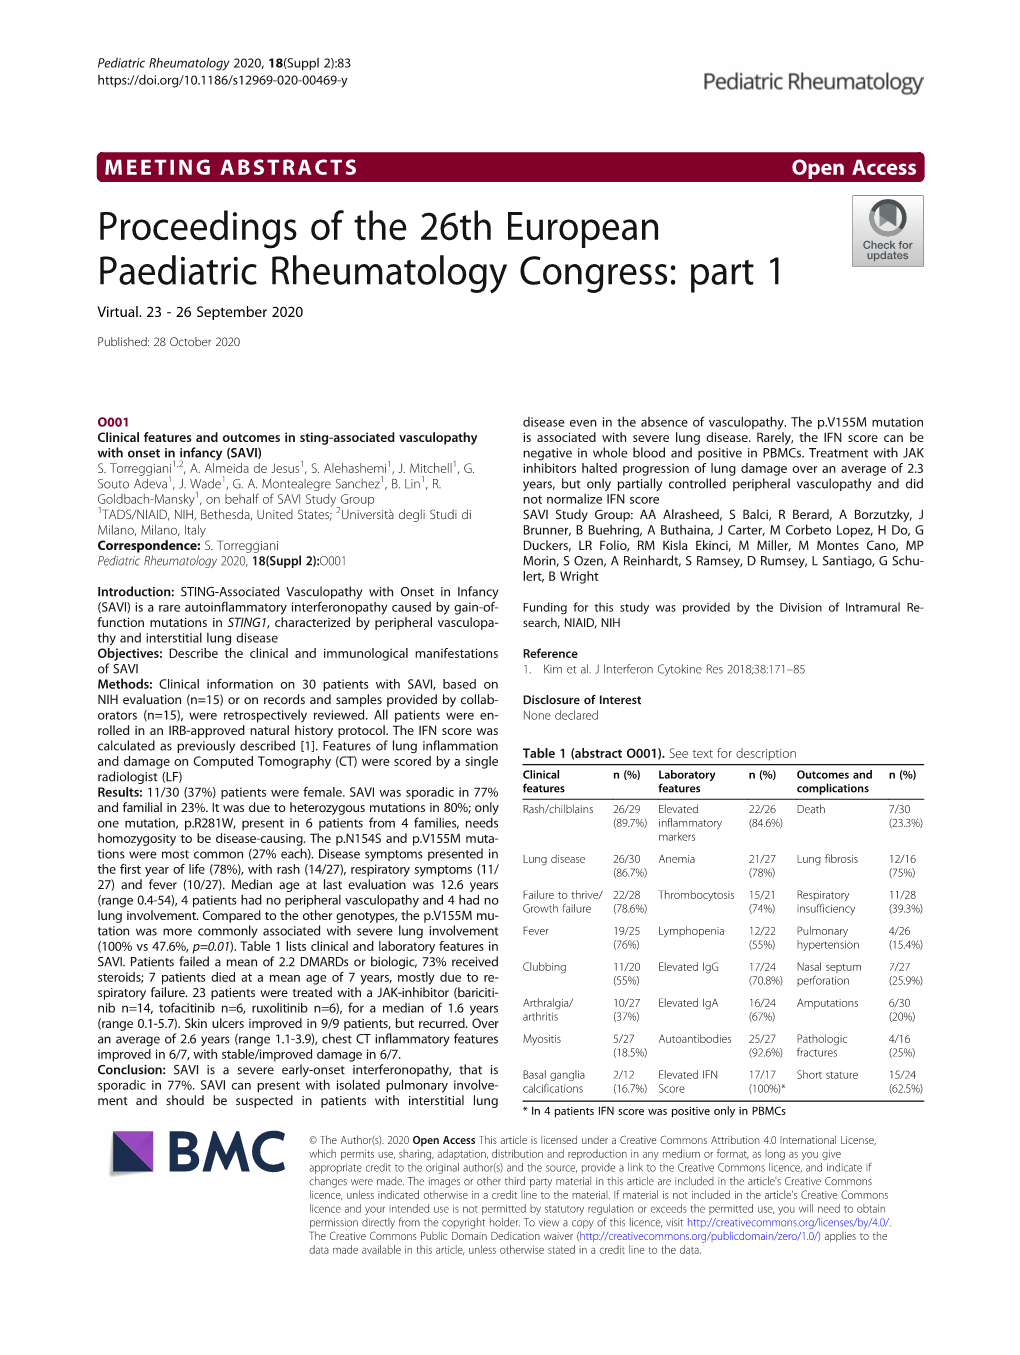 Proceedings of the 26Th European Paediatric Rheumatology Congress: Part 1 Virtual